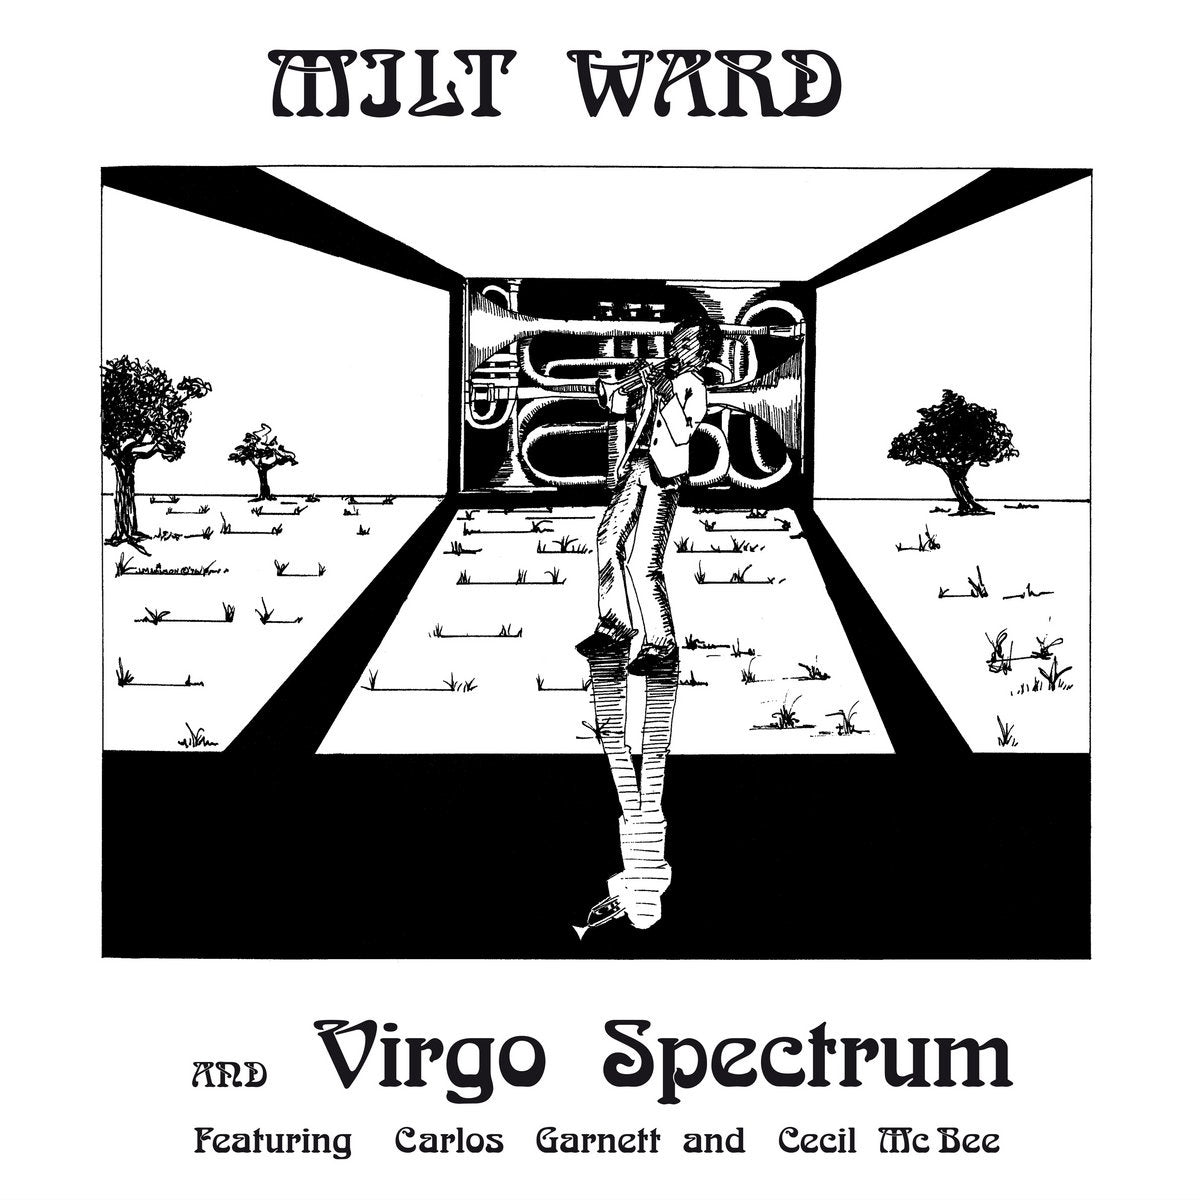 Milt Ward And Virgo Spectrum – Milt Ward And Virgo Spectrum